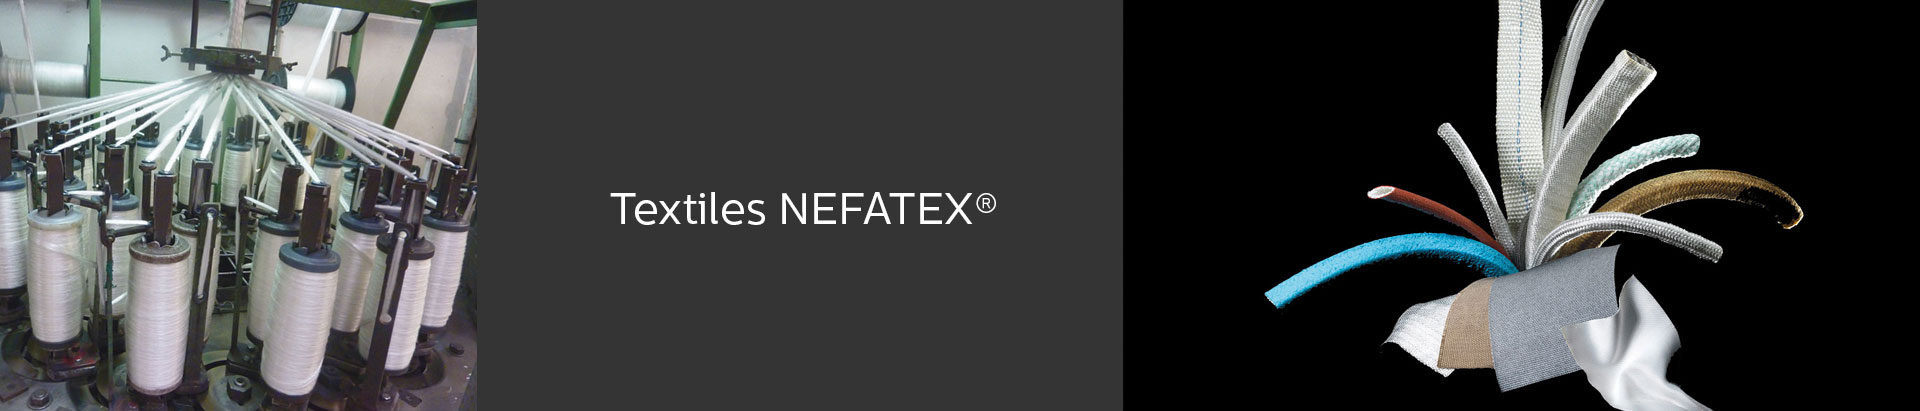 Textiles-NEFATEX-fr